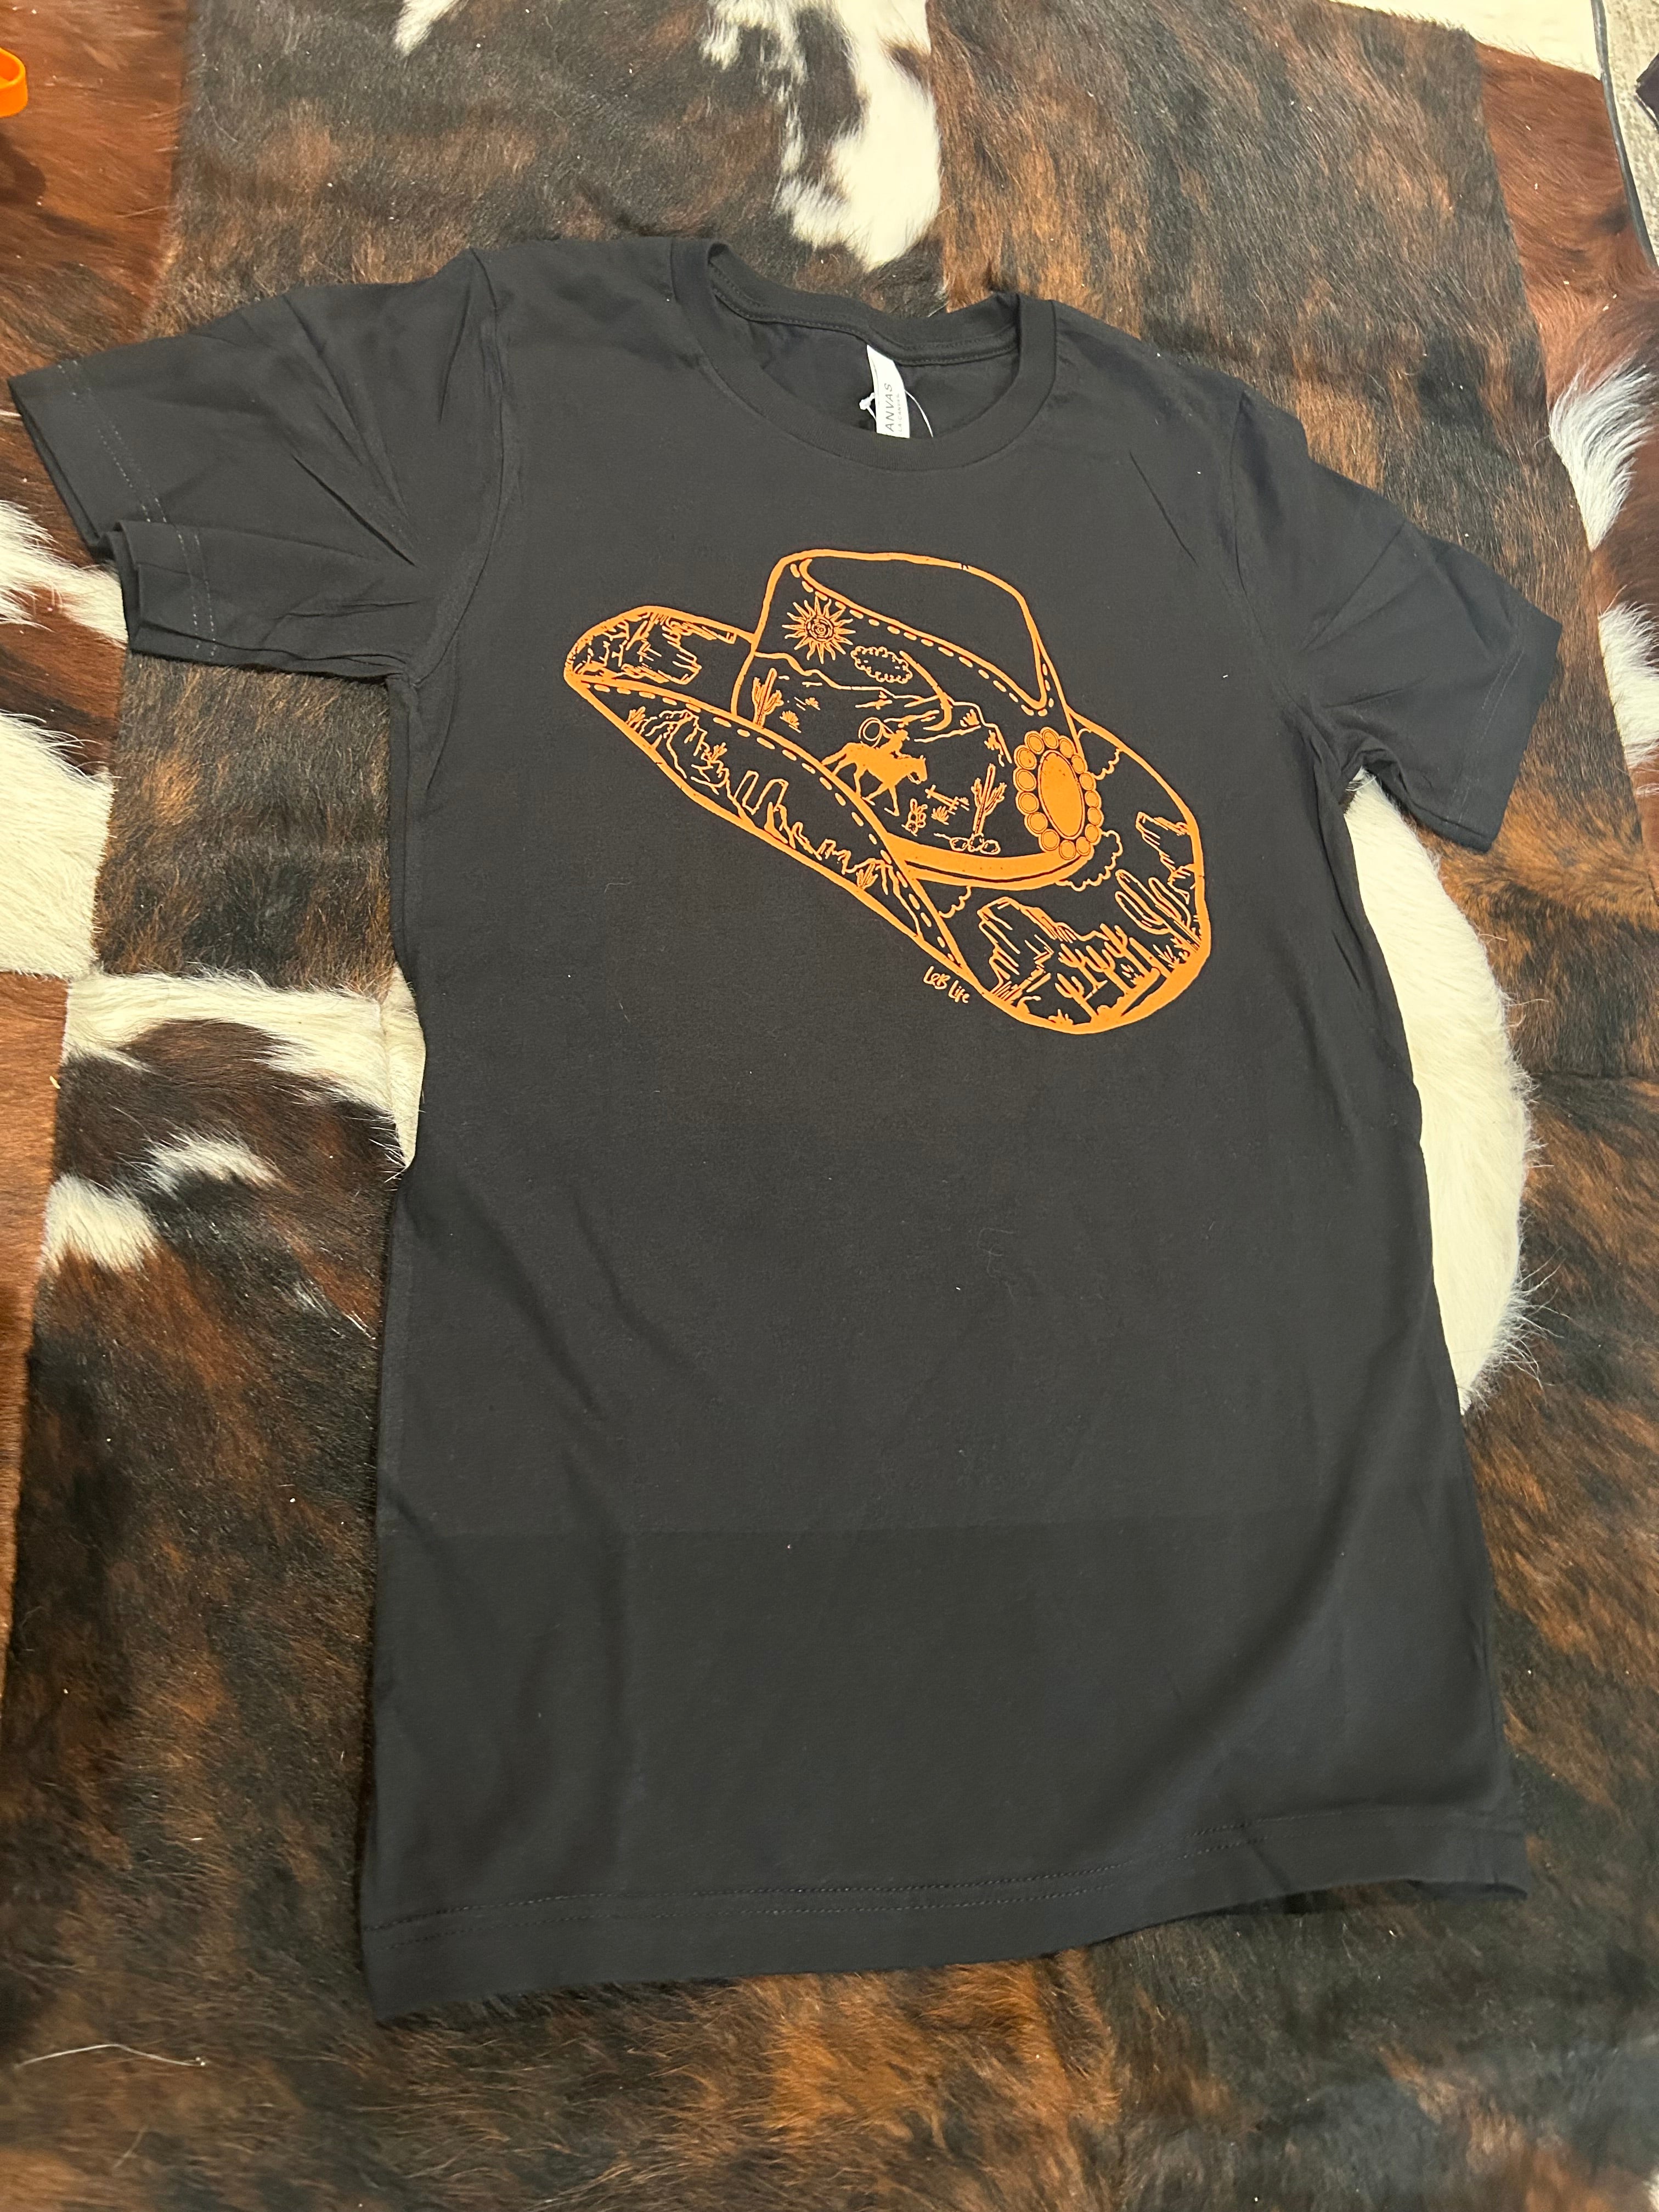 Women’s Black with Orange Western hat t-shirt